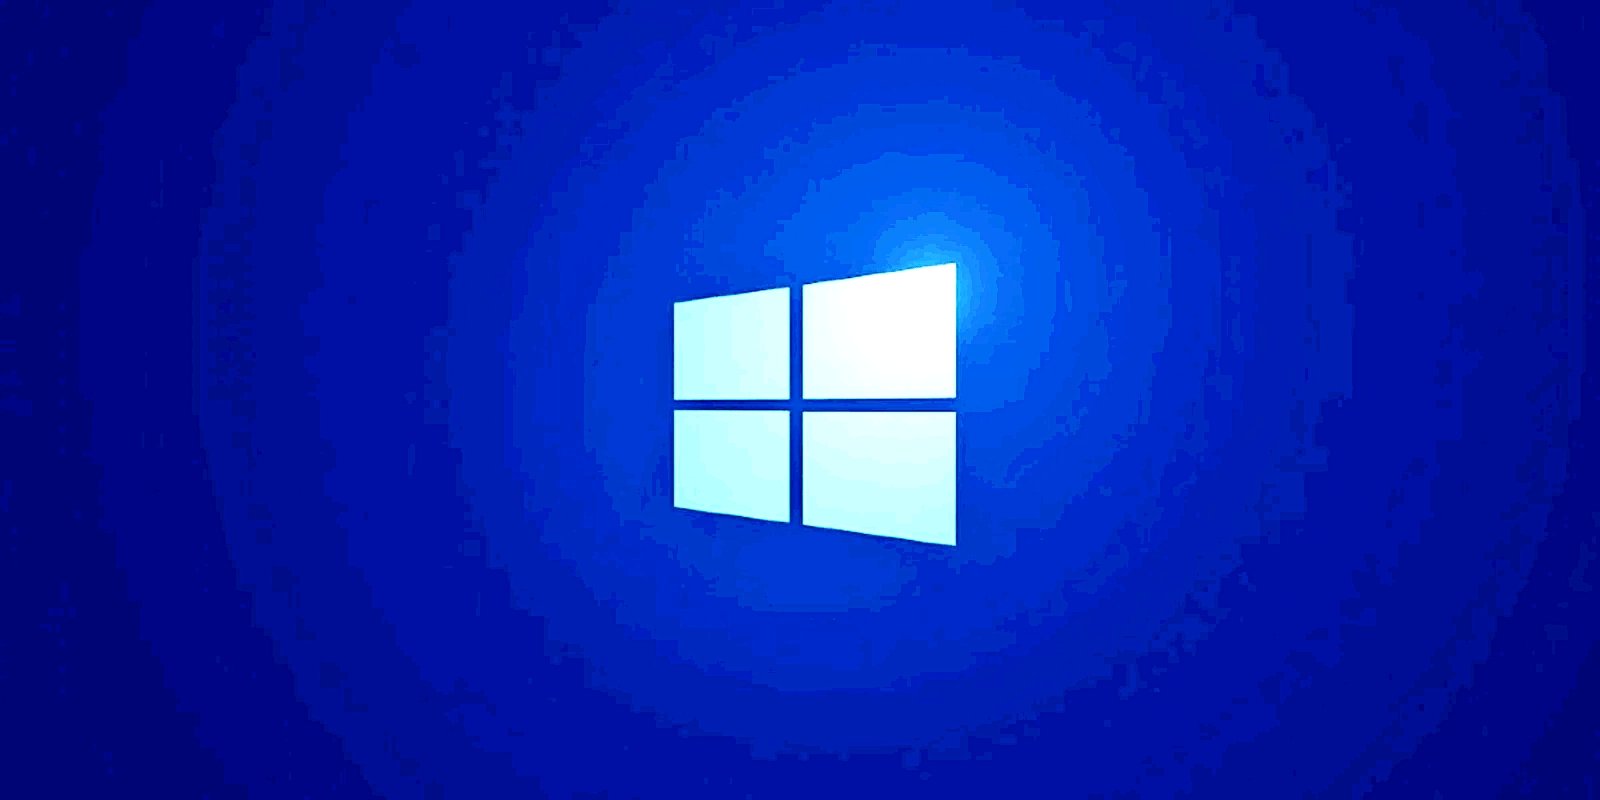 Microsoft fixes bug behind Windows 10 freezes, desktop issues